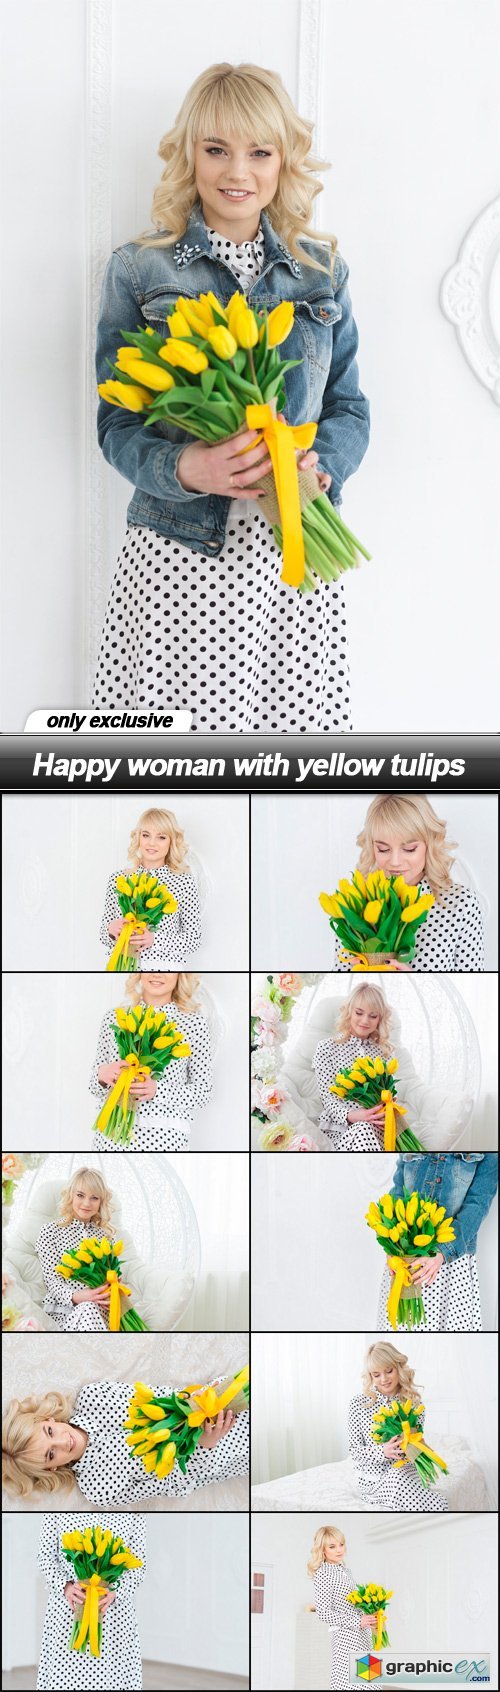 Happy woman with yellow tulips - 10 UHQ JPEG